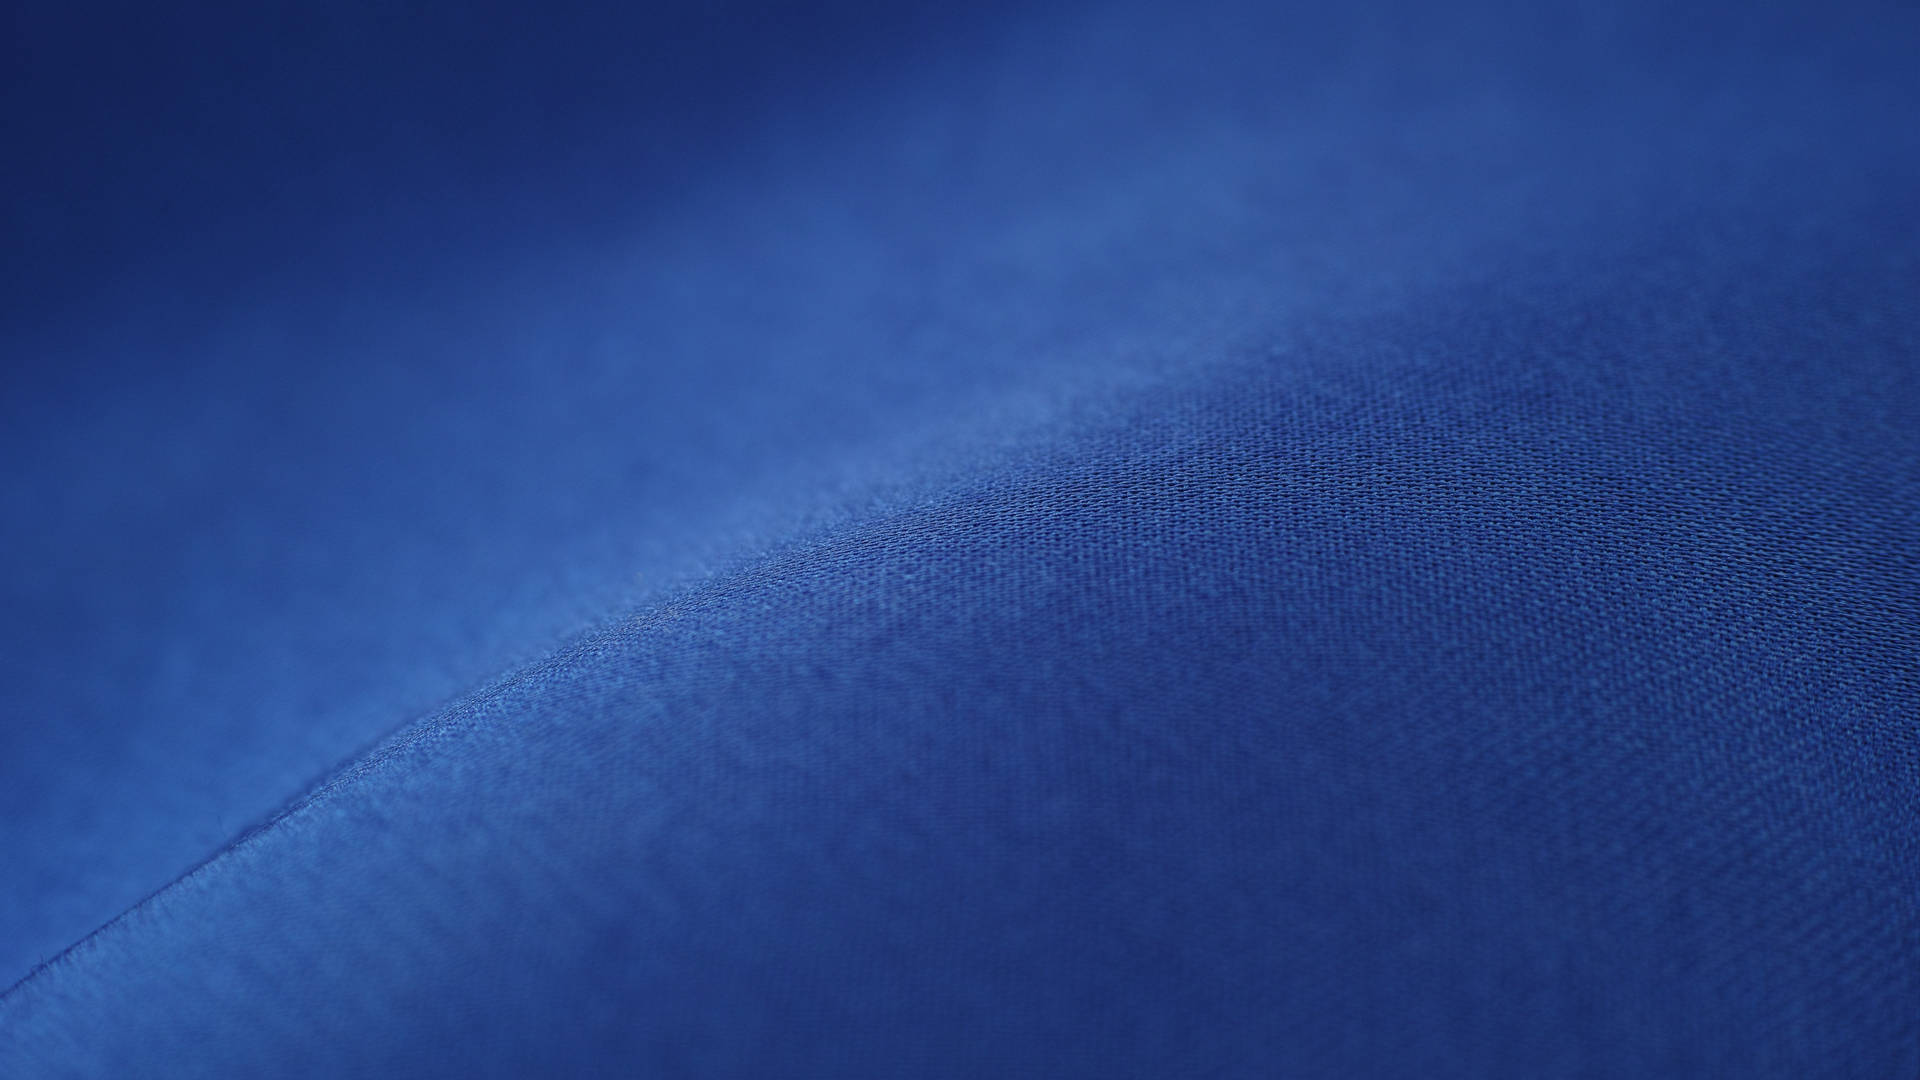 4d Ultra Hd Blue Fabric